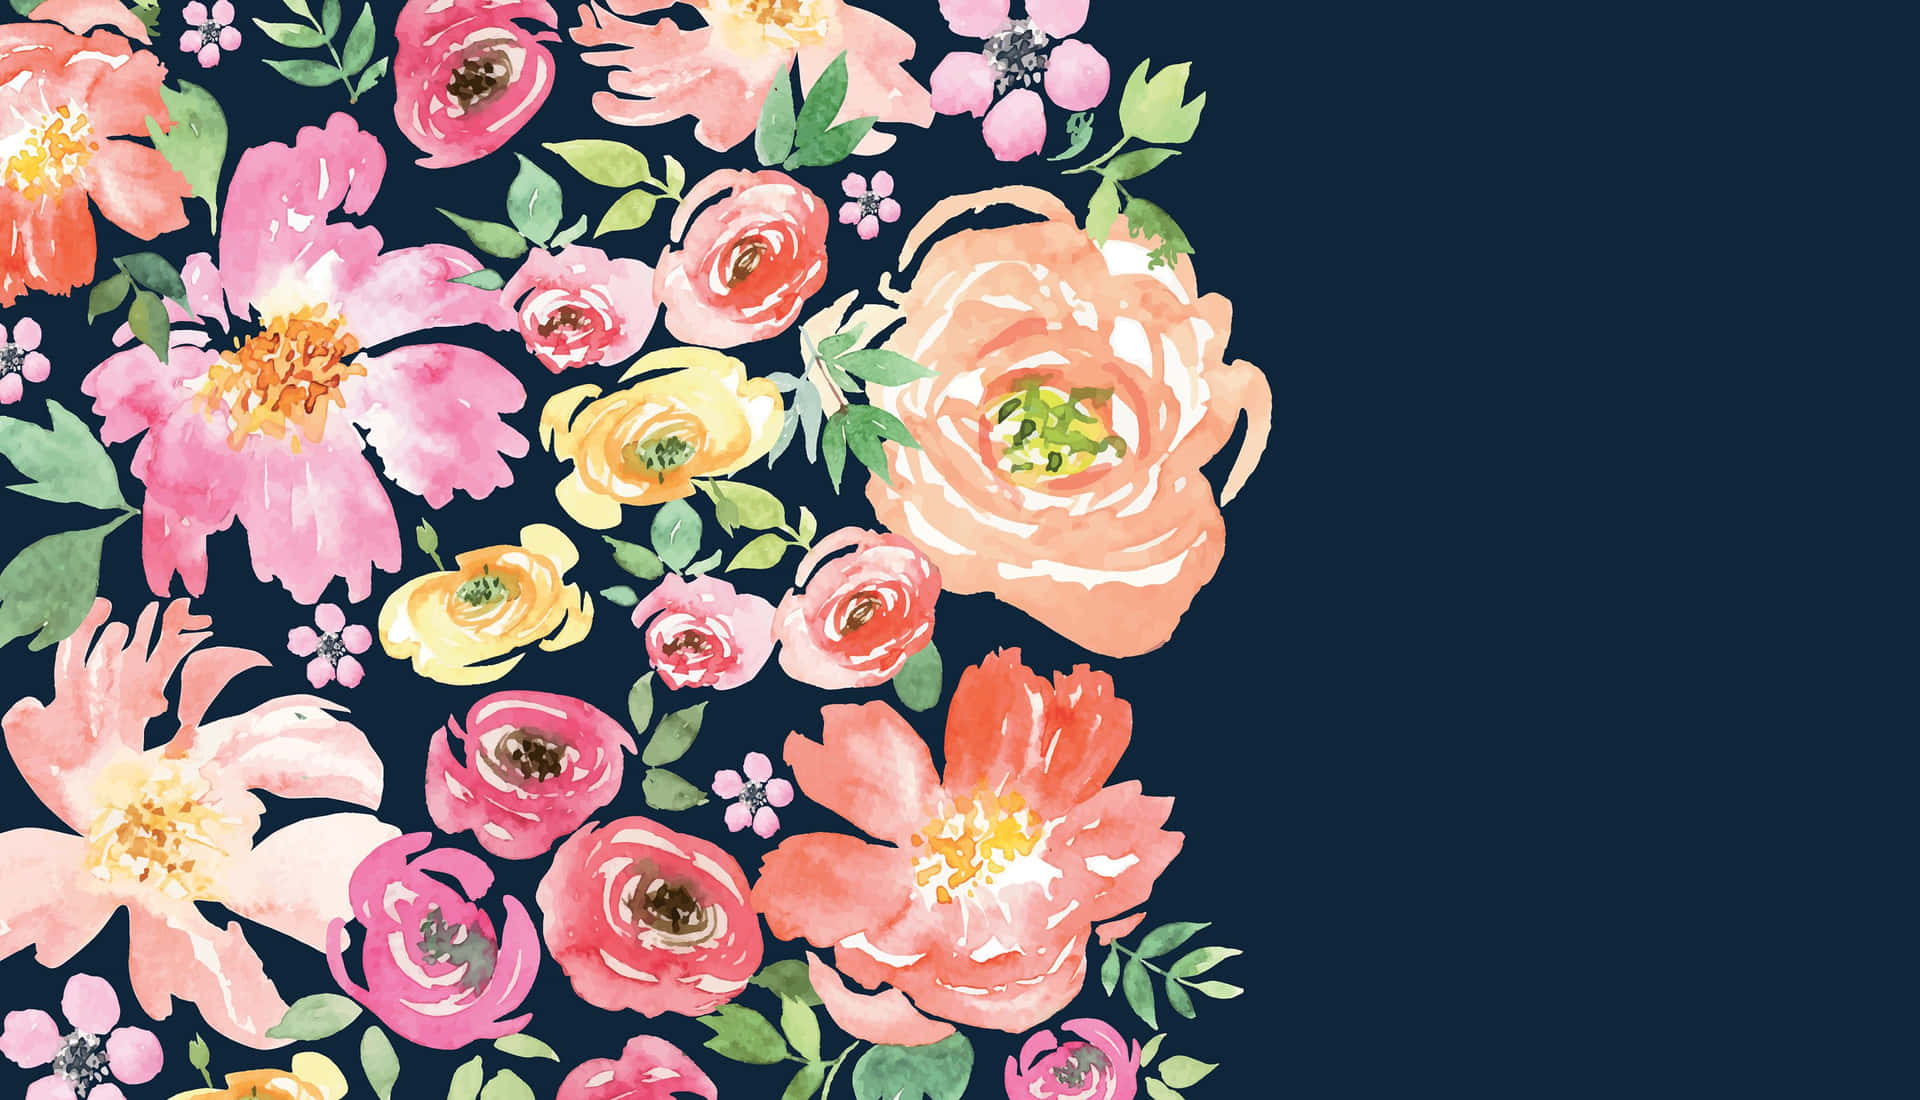 Free Vector  Watercolor floral wallpaper in pastel colors